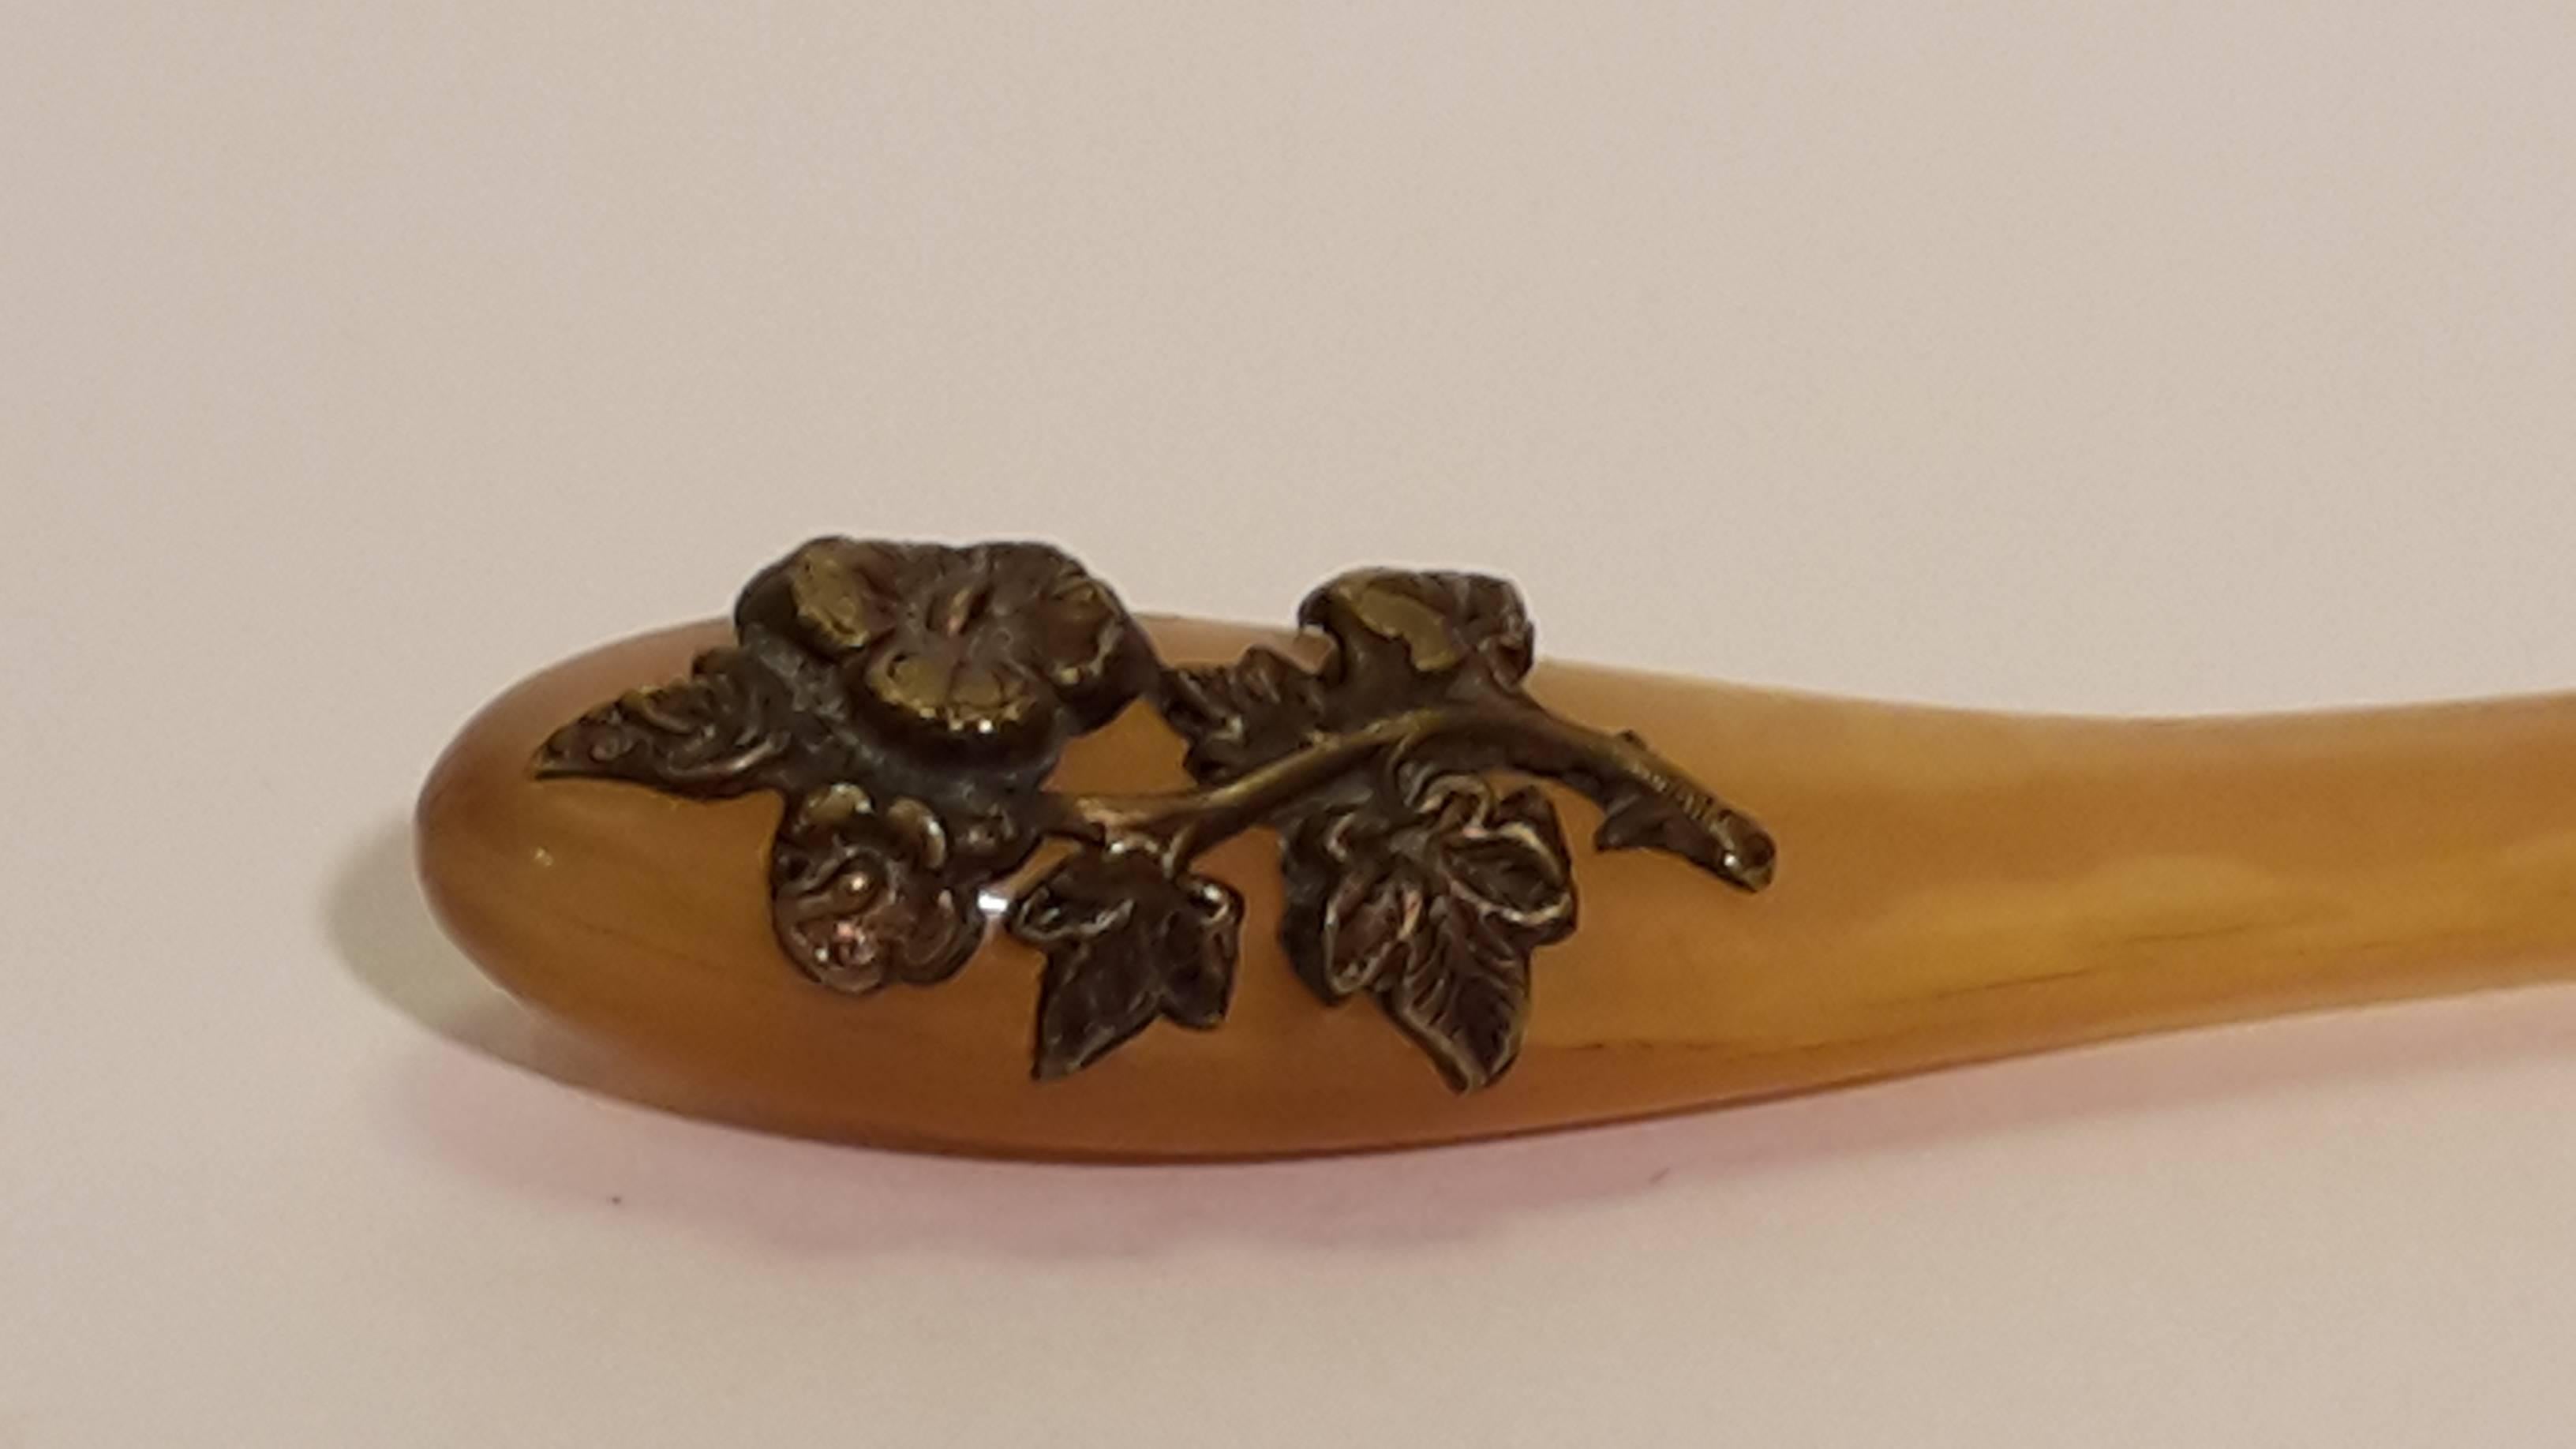 Contemporary Italian brass decoration feather, reminiscent of Art Nouveau. 
Beautiful color, unique item, collectible.